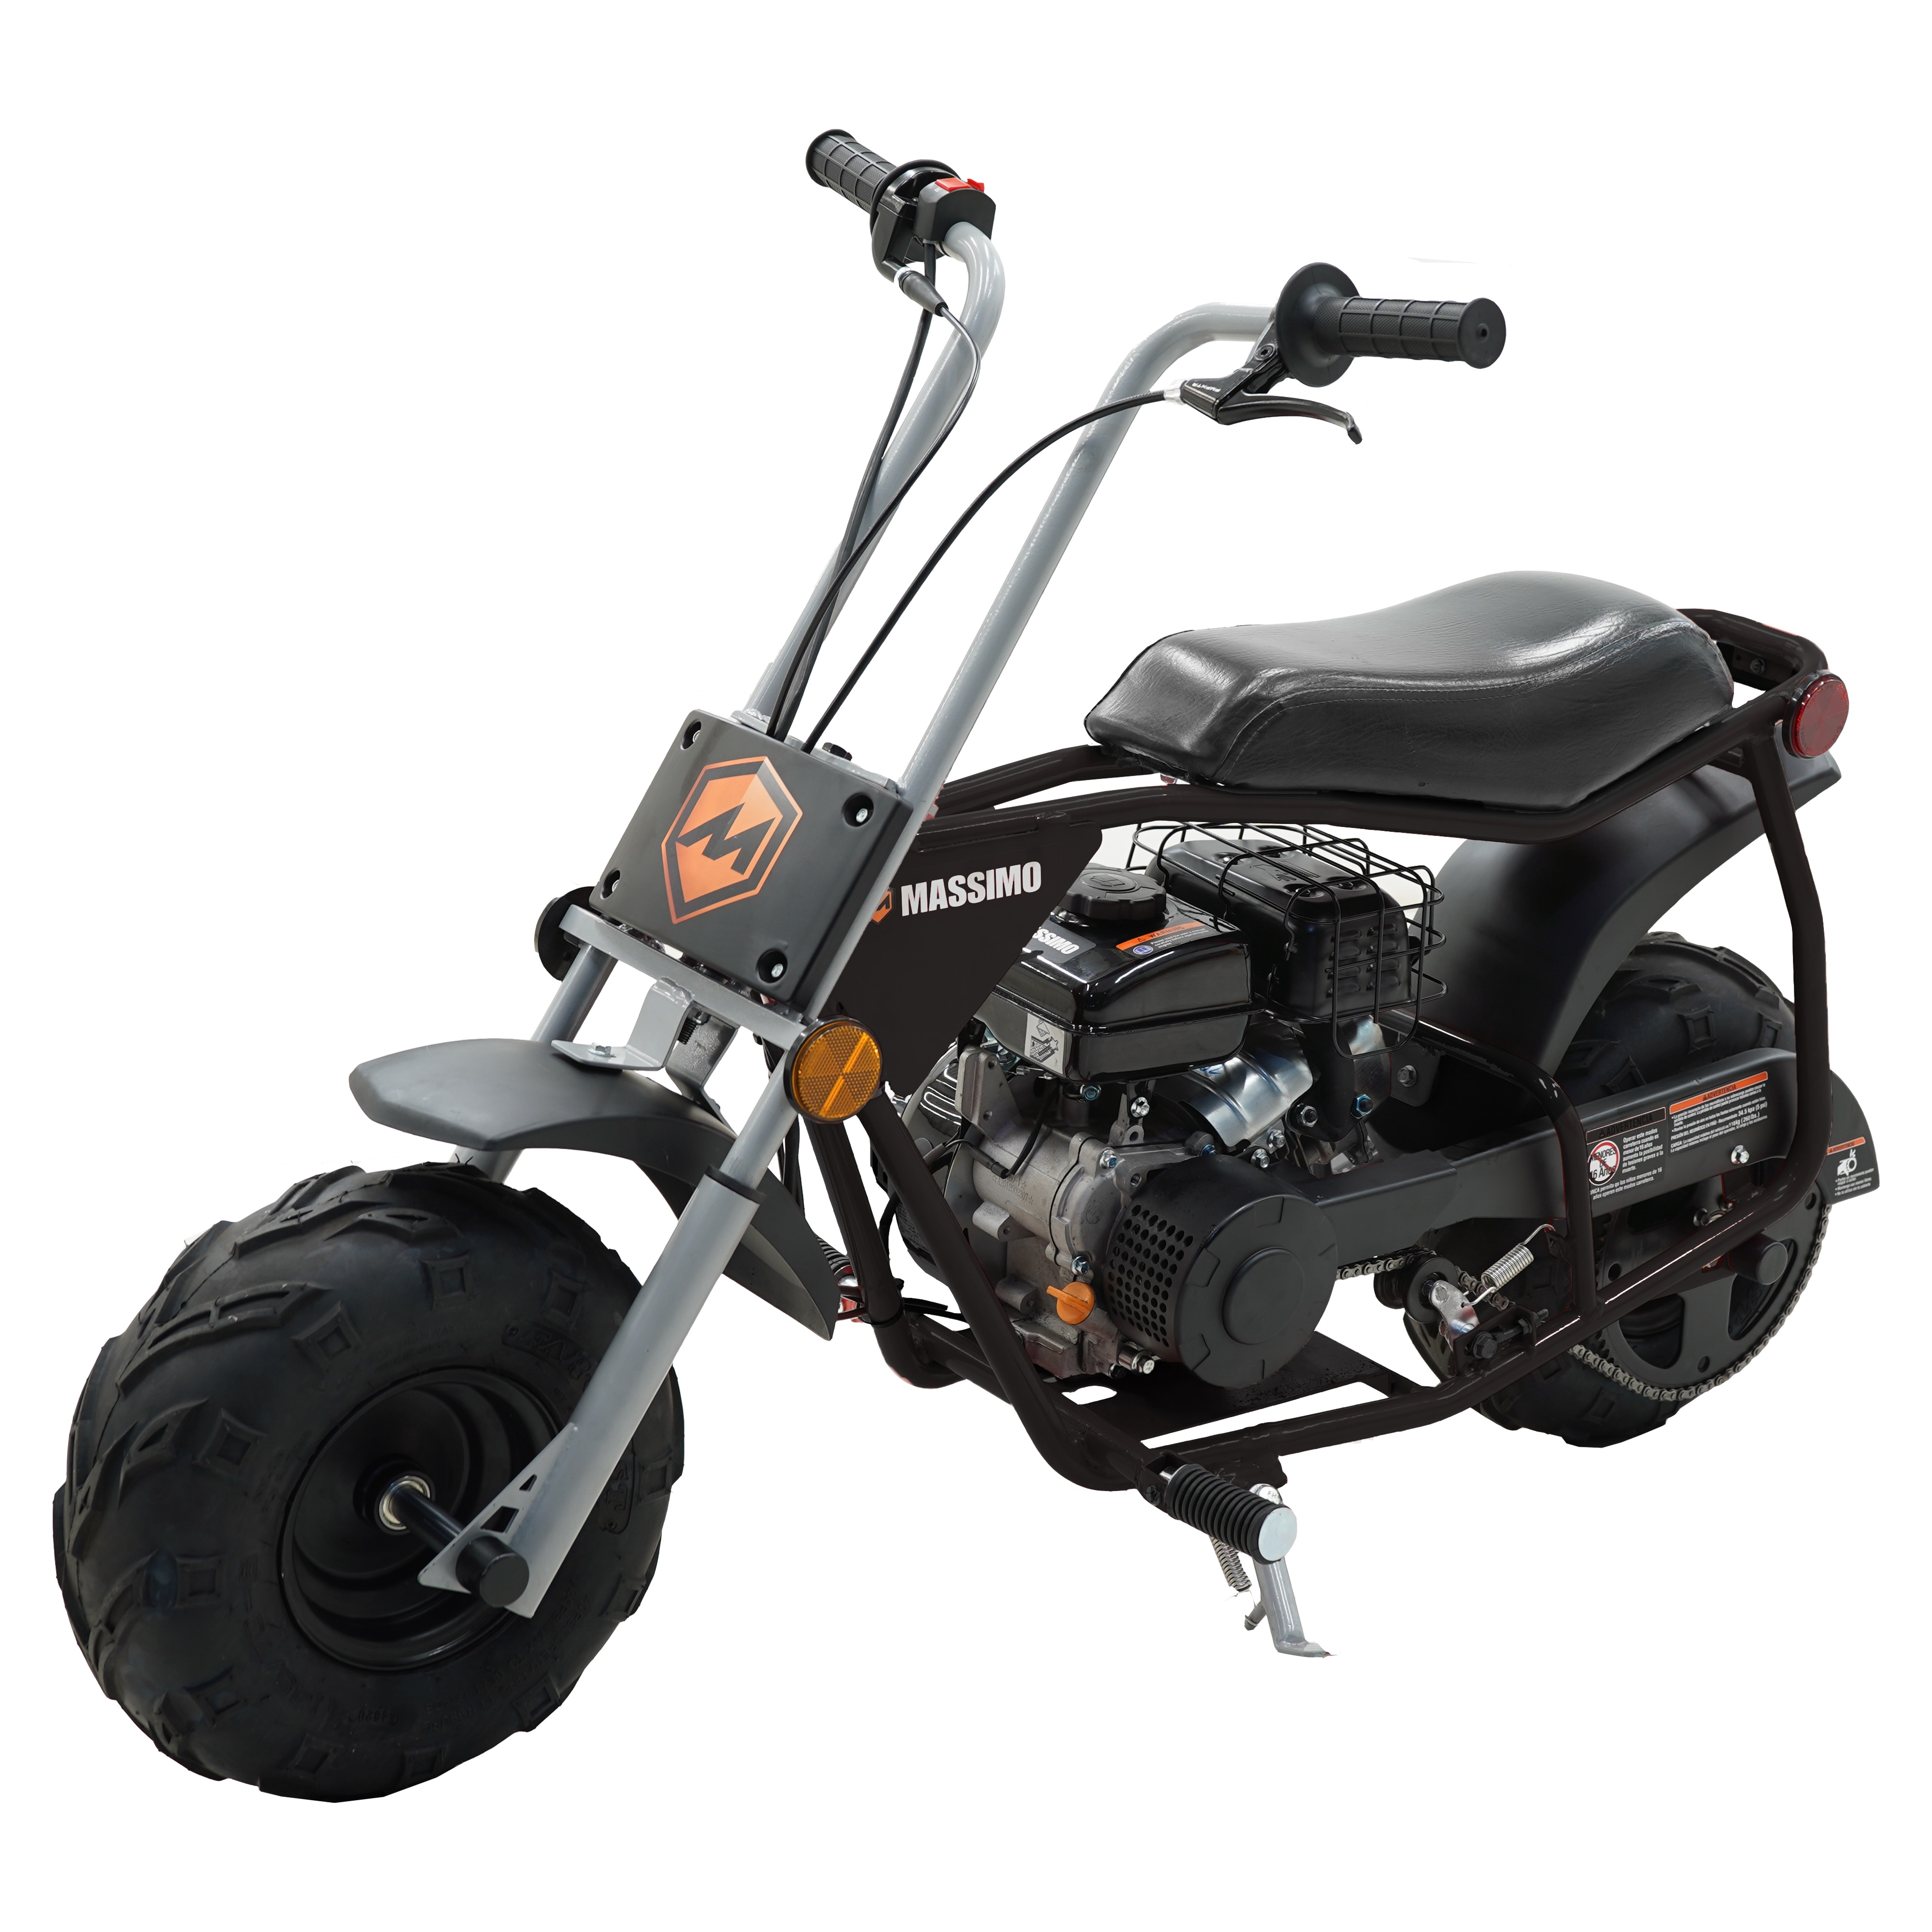 Massimo Motor MB100 2.5 HP 79cc 4-Stroke Gas Powered Mini Bike Motorcycle Trail Bike (Black) - image 1 of 8